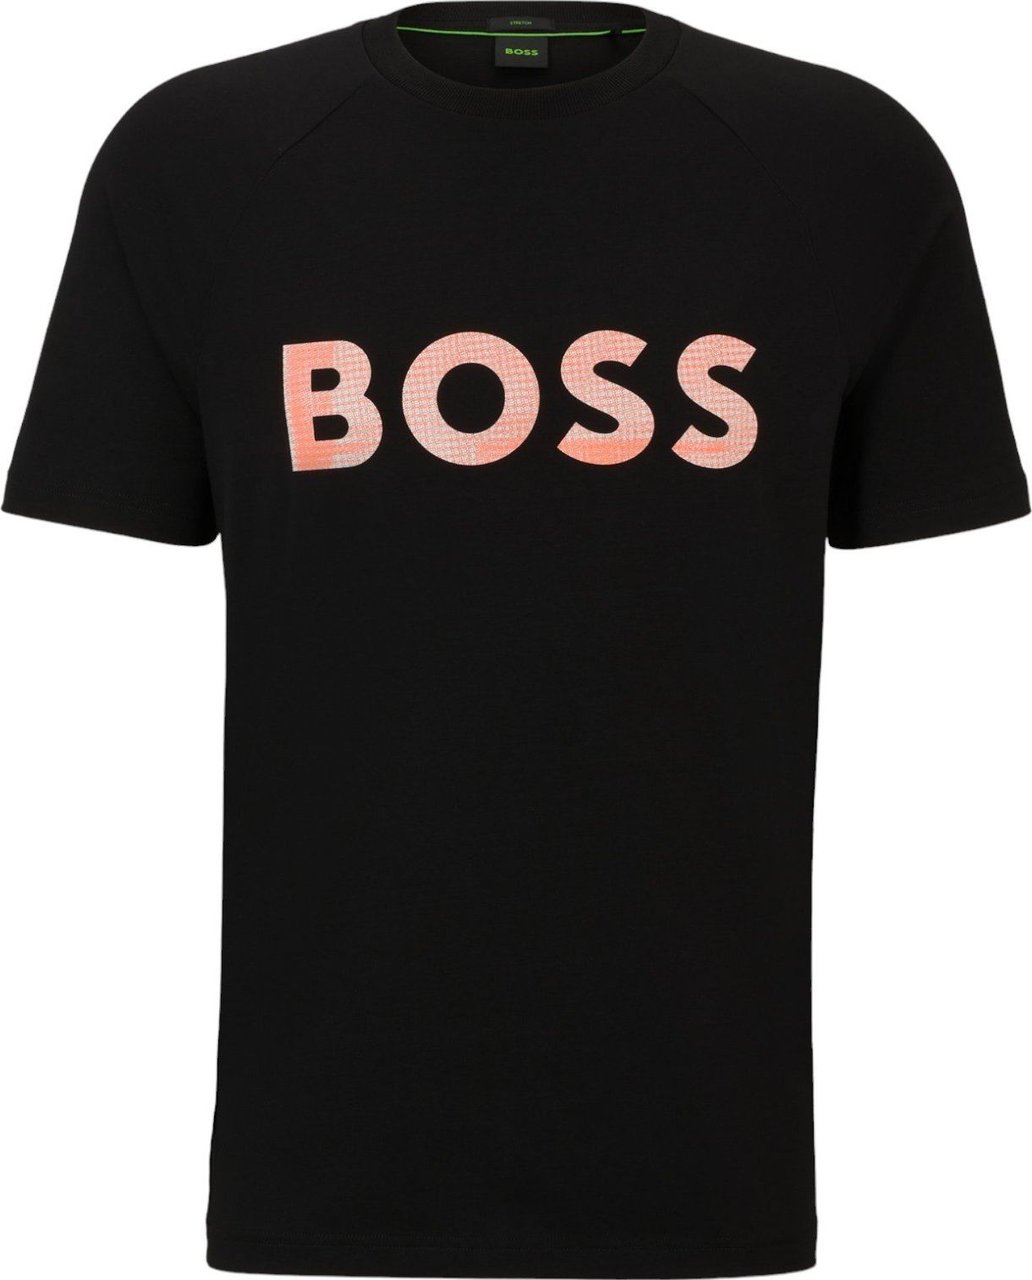 Hugo Boss Boss Heren T-shirt Zwart 50512999/001 TEEBERO Zwart